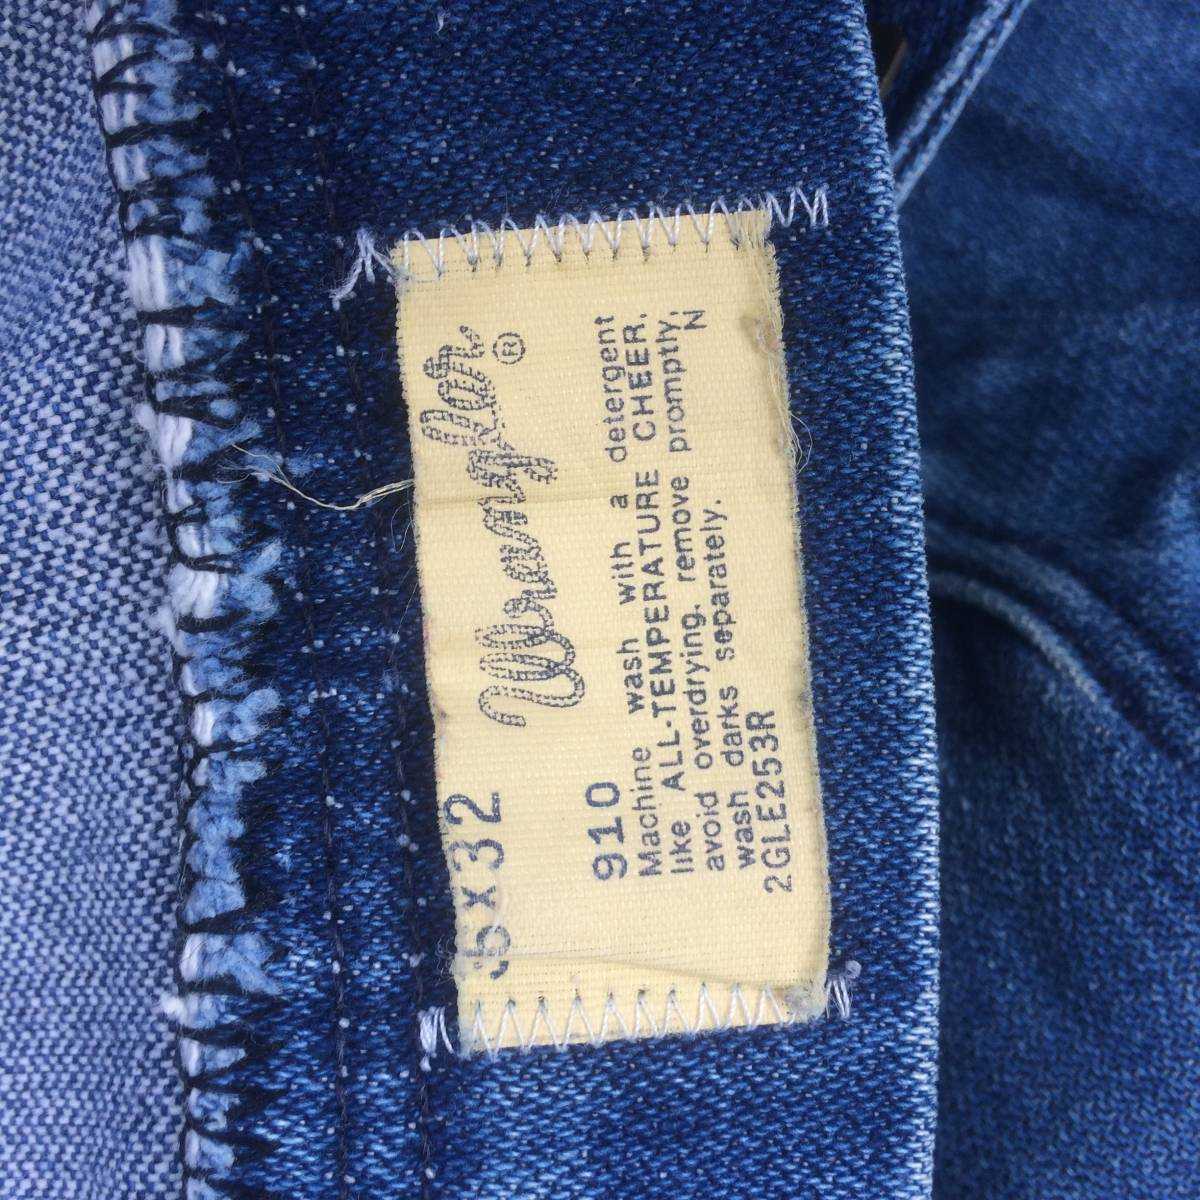 Wrangler 910 13MWZ Jeans ラングラー ジーンズ 80’s アメリカ製 vintage ビンテージ オールド ブロークン 36 縦落 ひげ denim_画像2